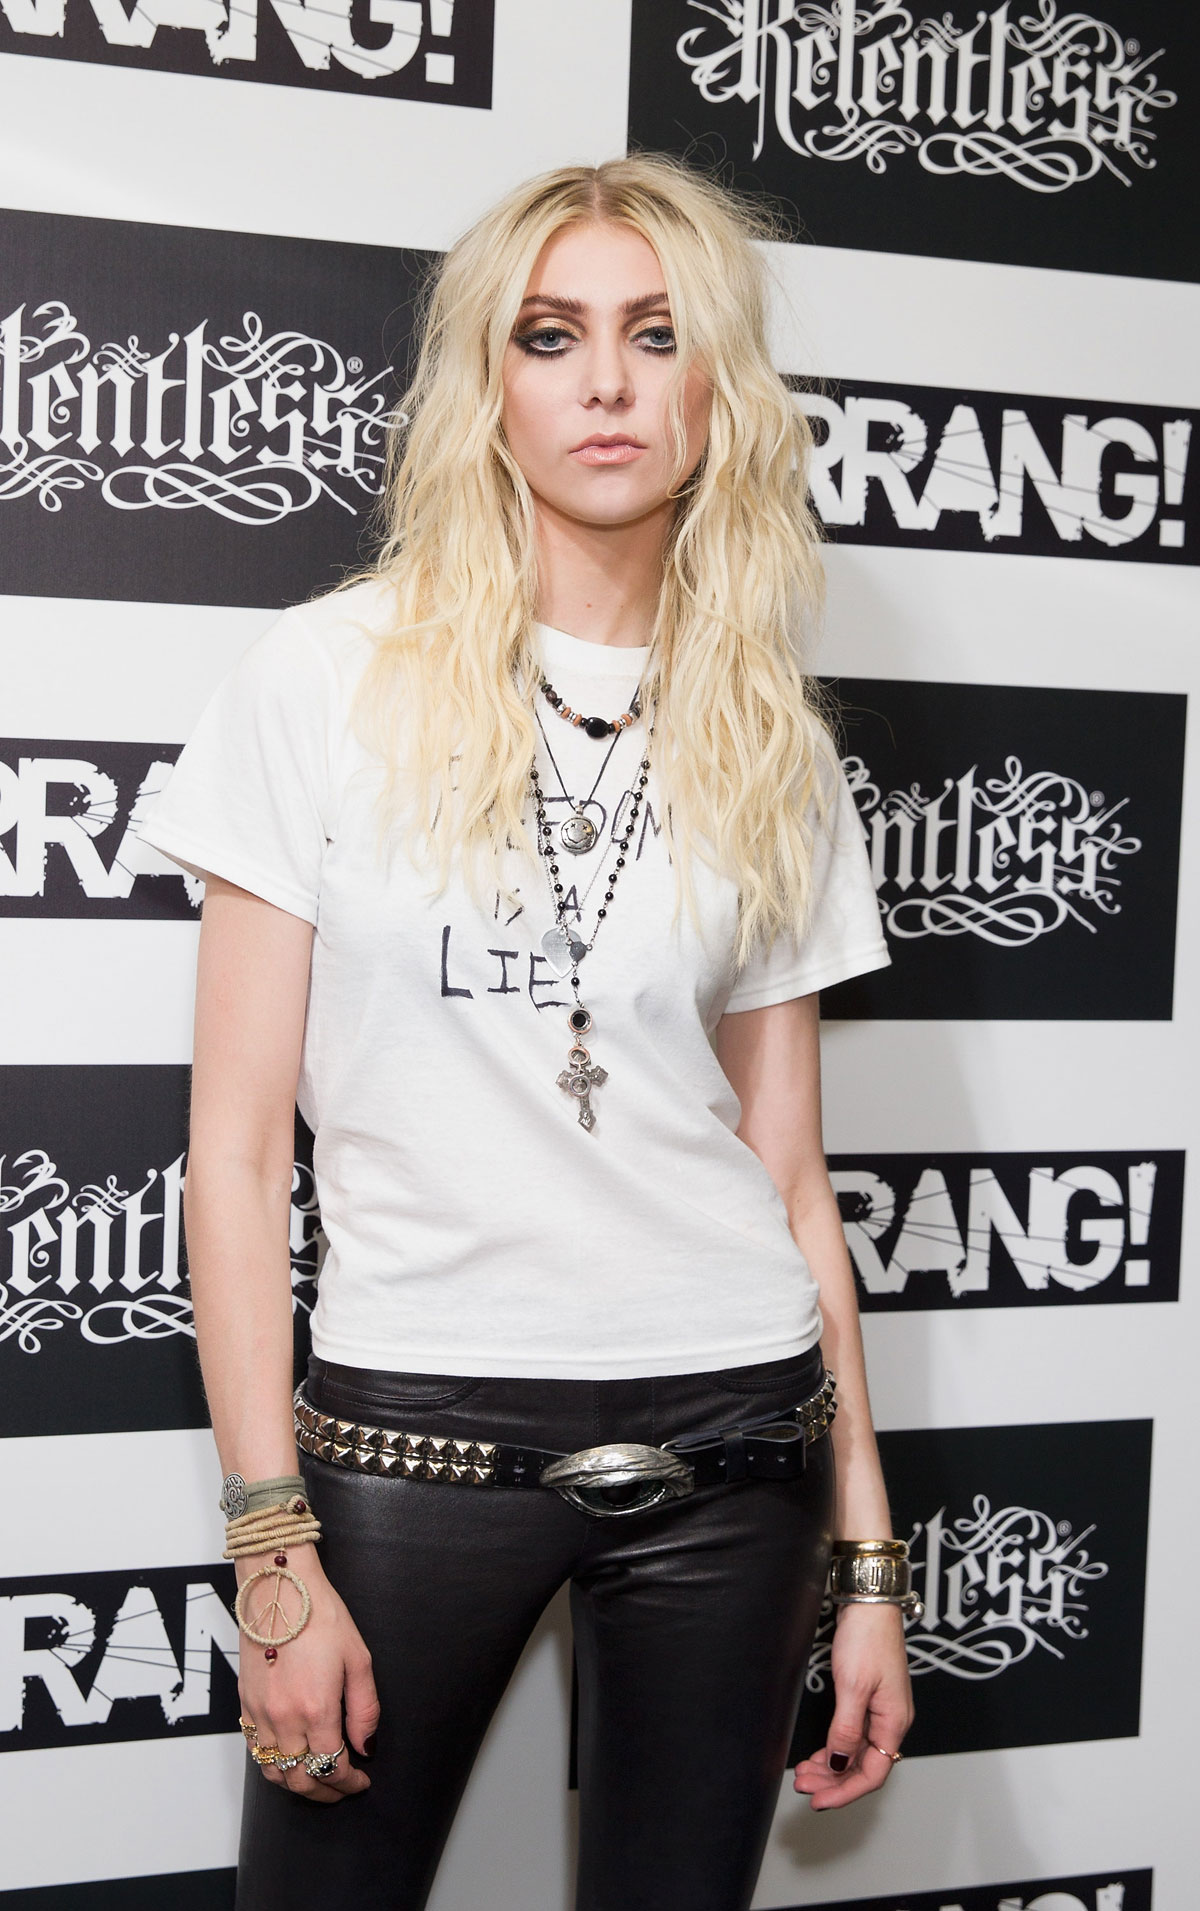 Taylor Momsen attends Kerrang Awards at the Troxy